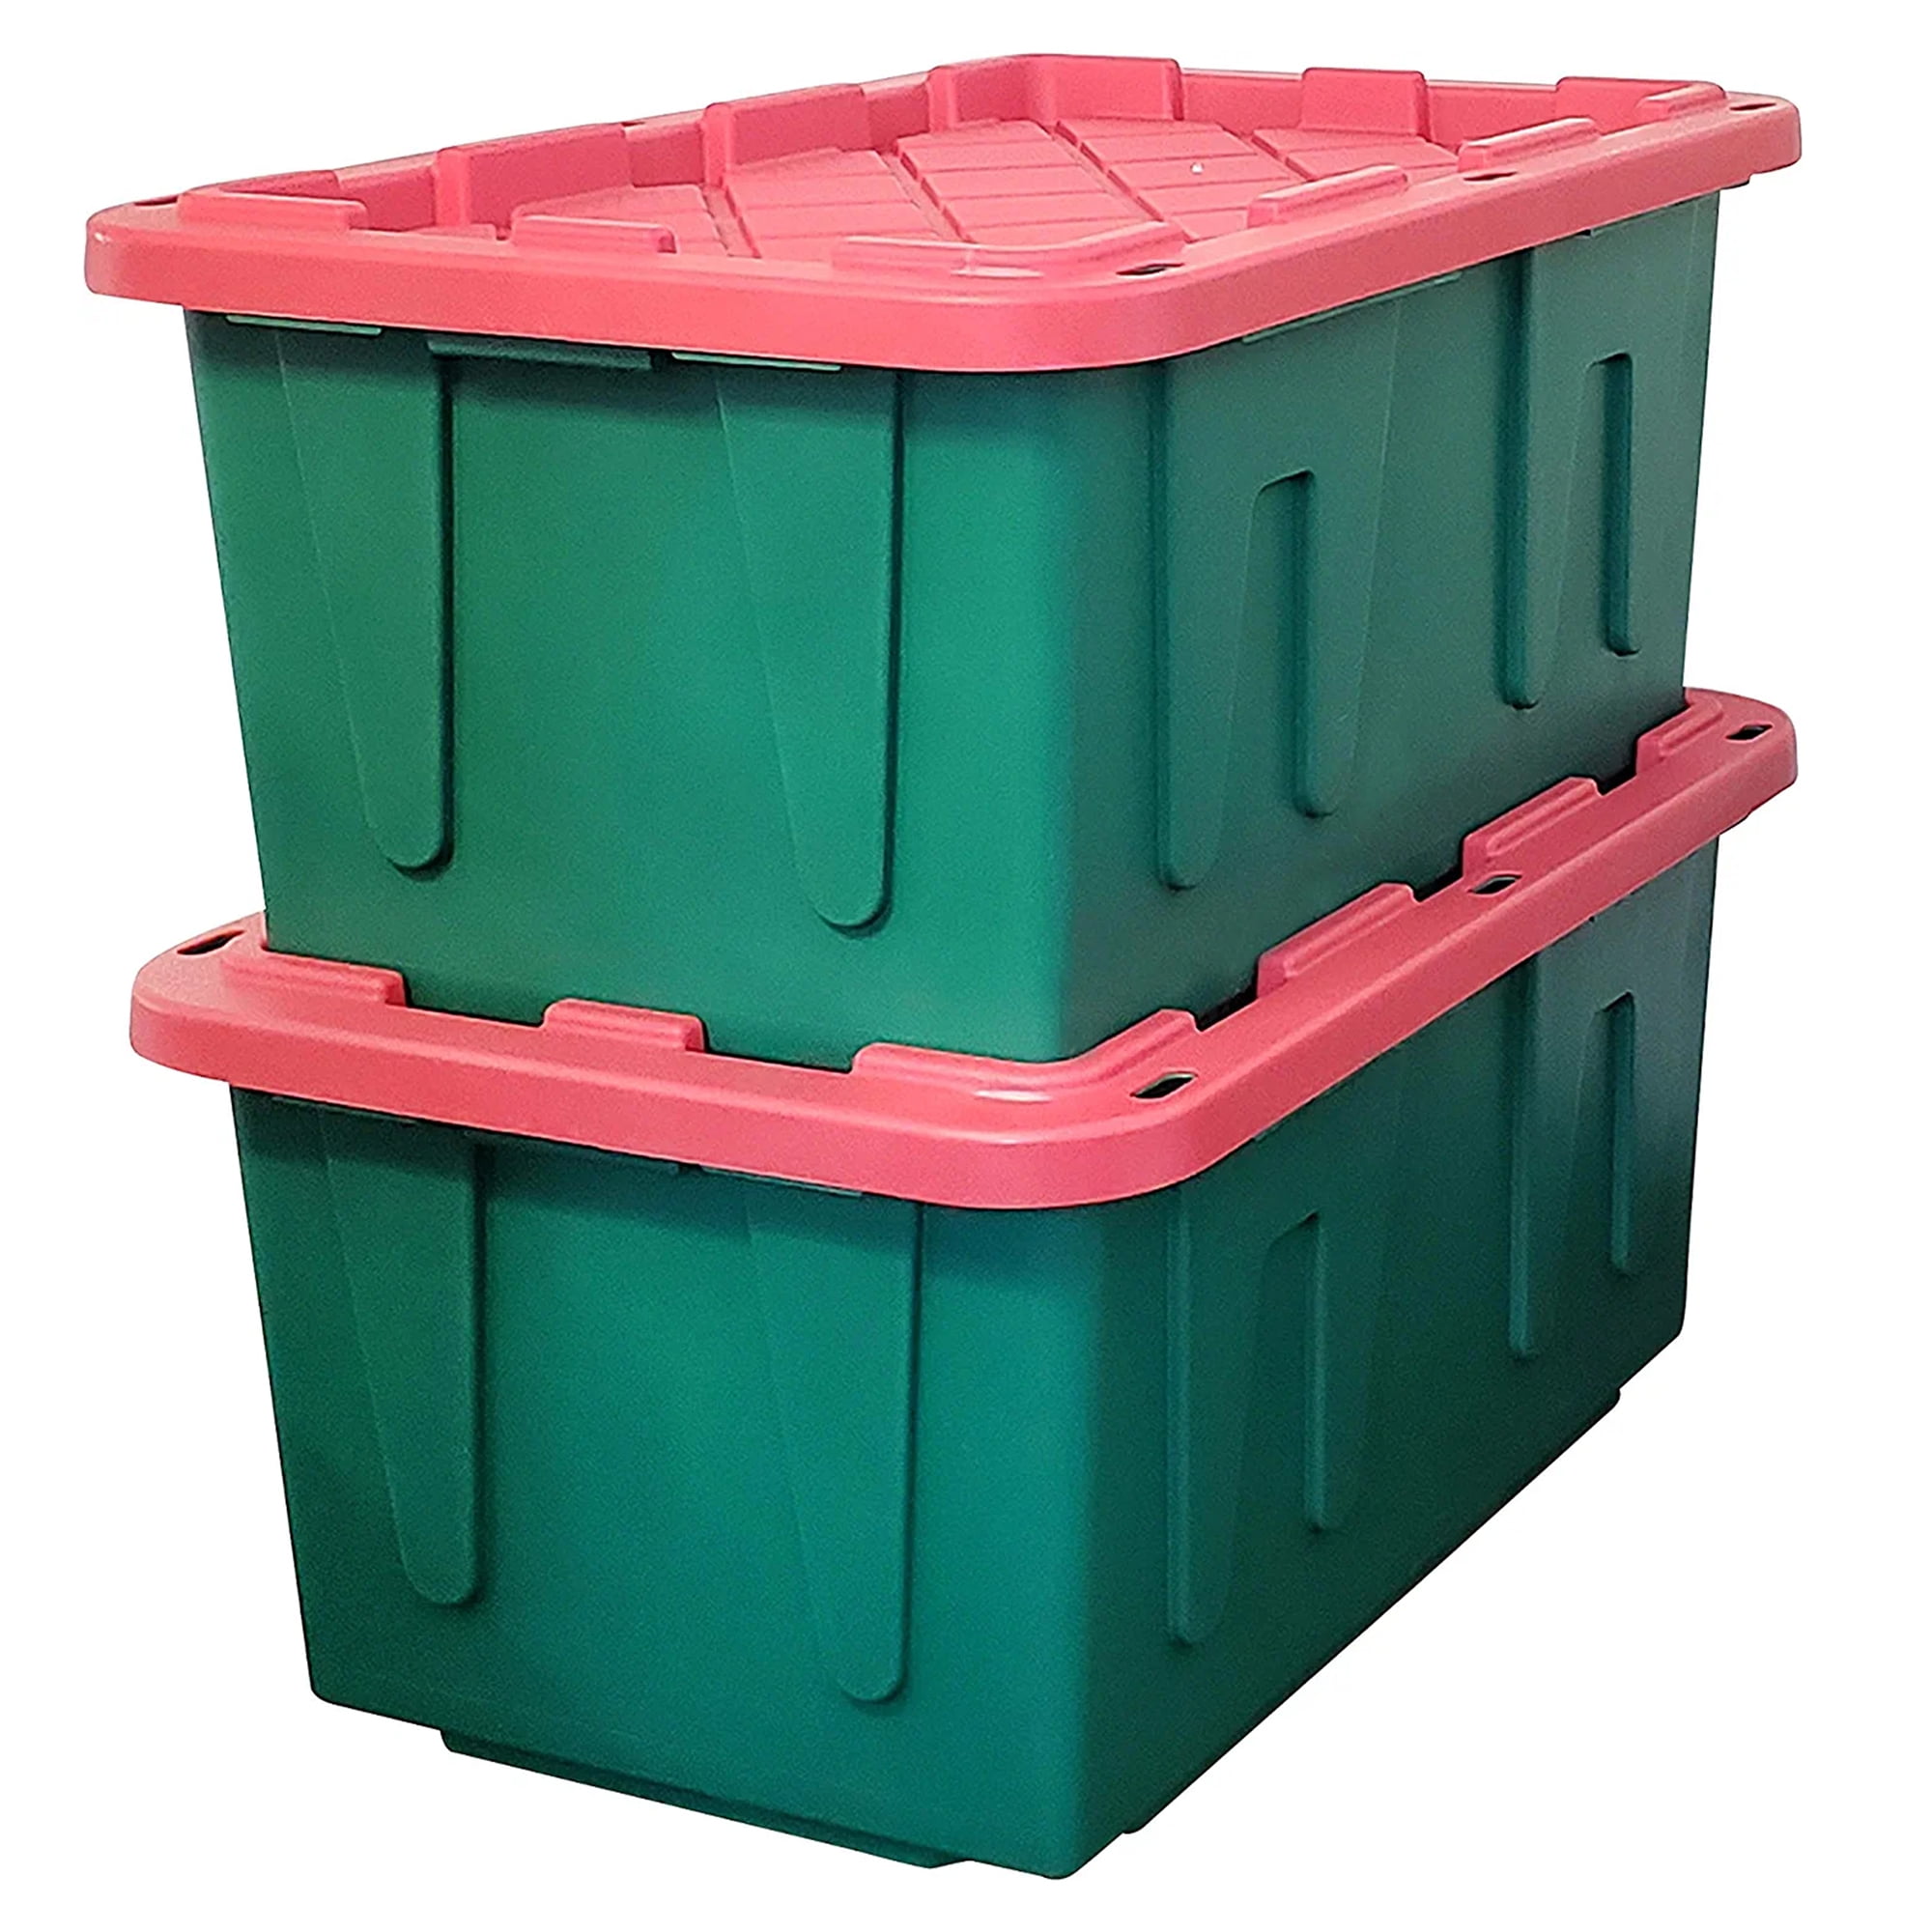 HOMZ Durabilt 27 Gallon Heavy-Duty Holiday Storage Tote, Green/Red